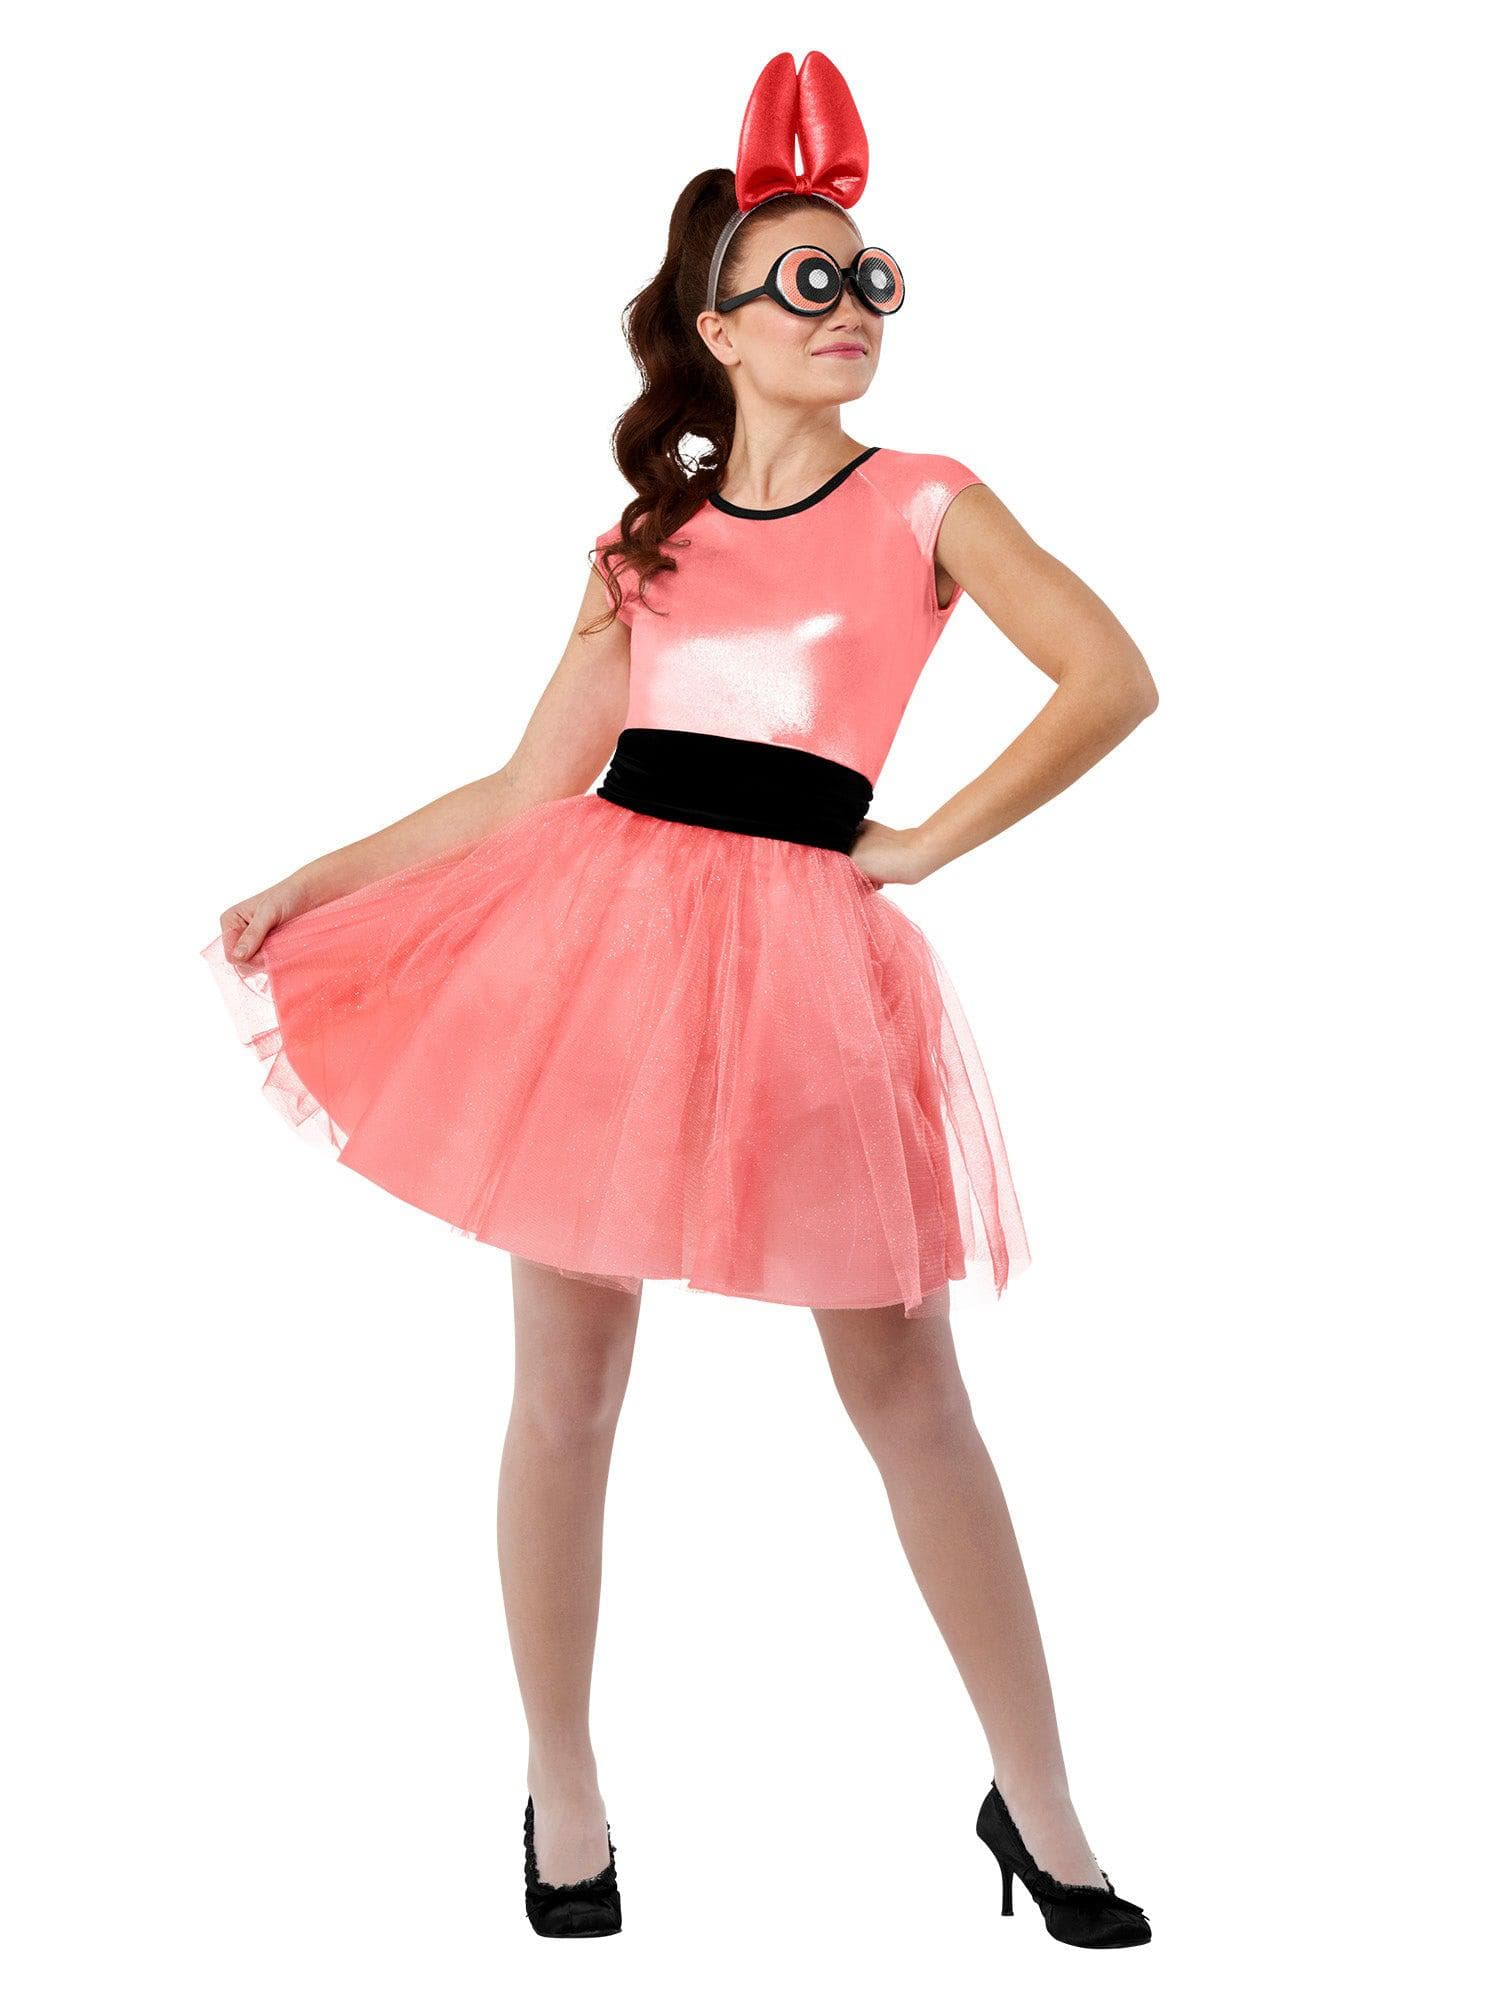 Powerpuff Girls Blossom Adult Costume - costumes.com